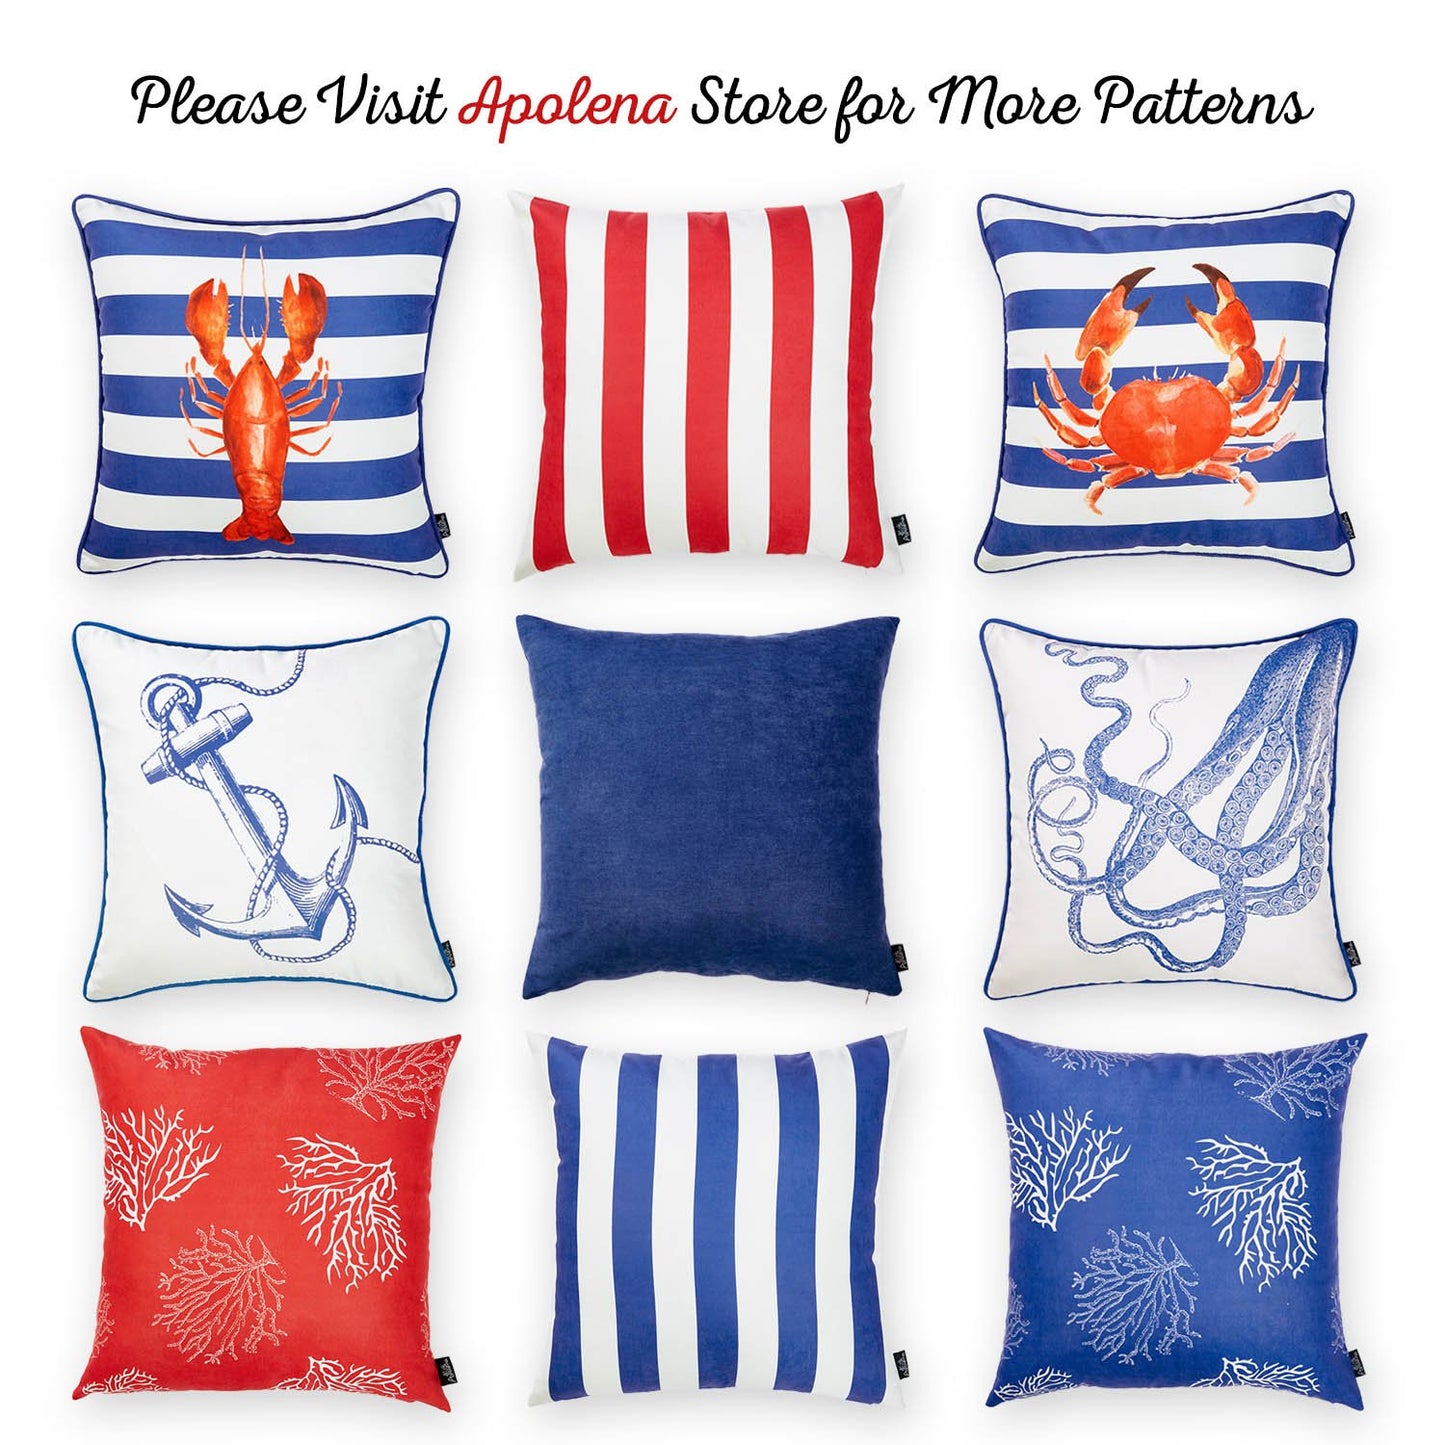 Nautica Red Reef Square 18" Throw Pillow Cover - Apolena